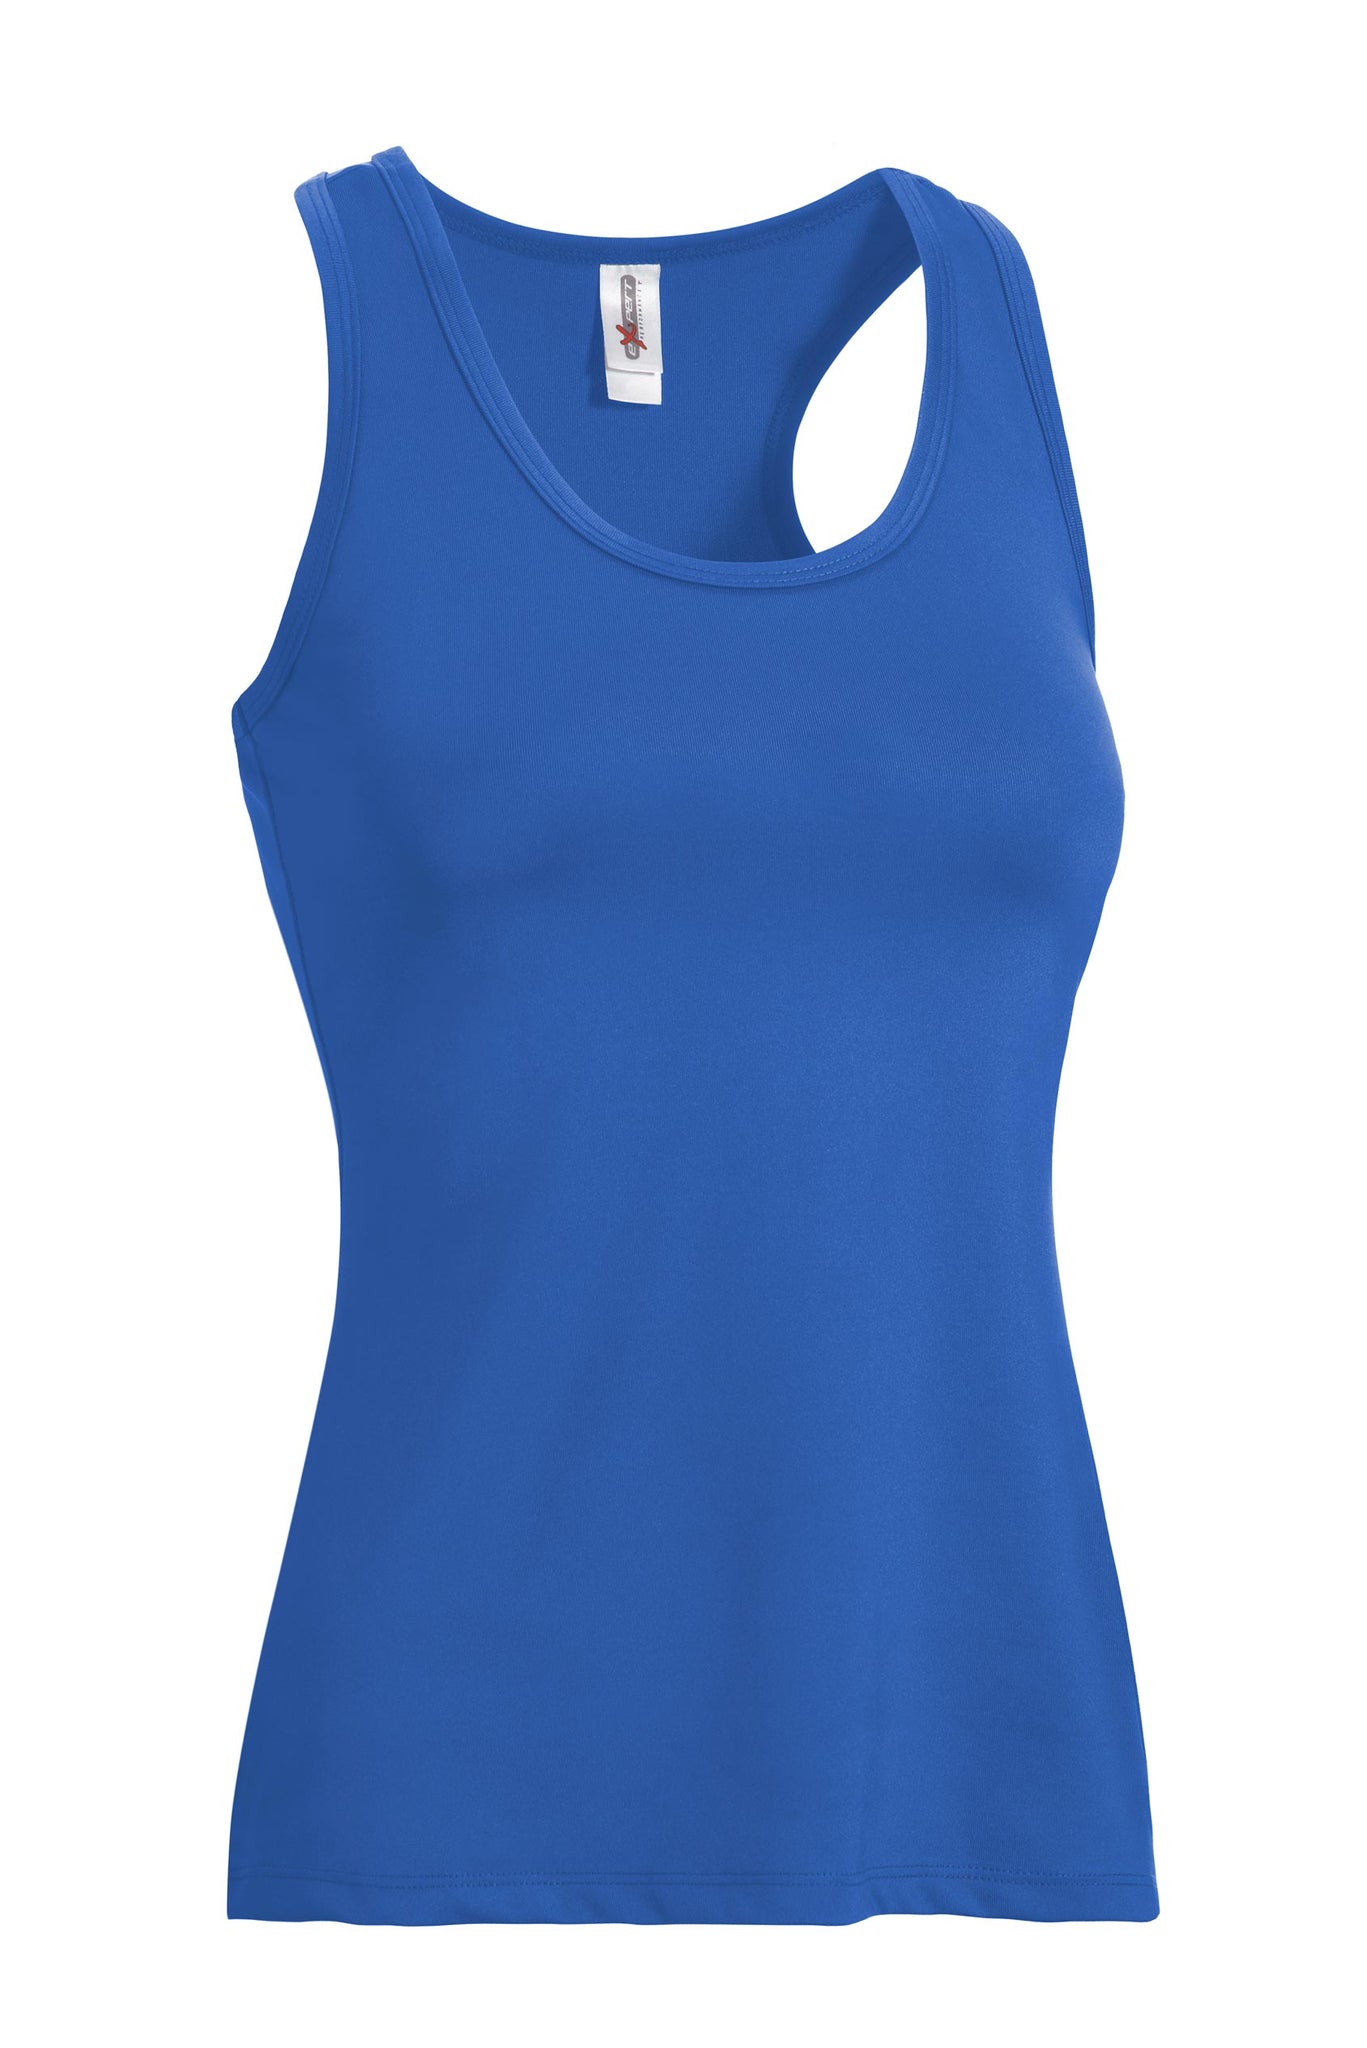 Expert Brand Wholesale Made in USA women's gym racerback tank in cadet blue#cadet-blue